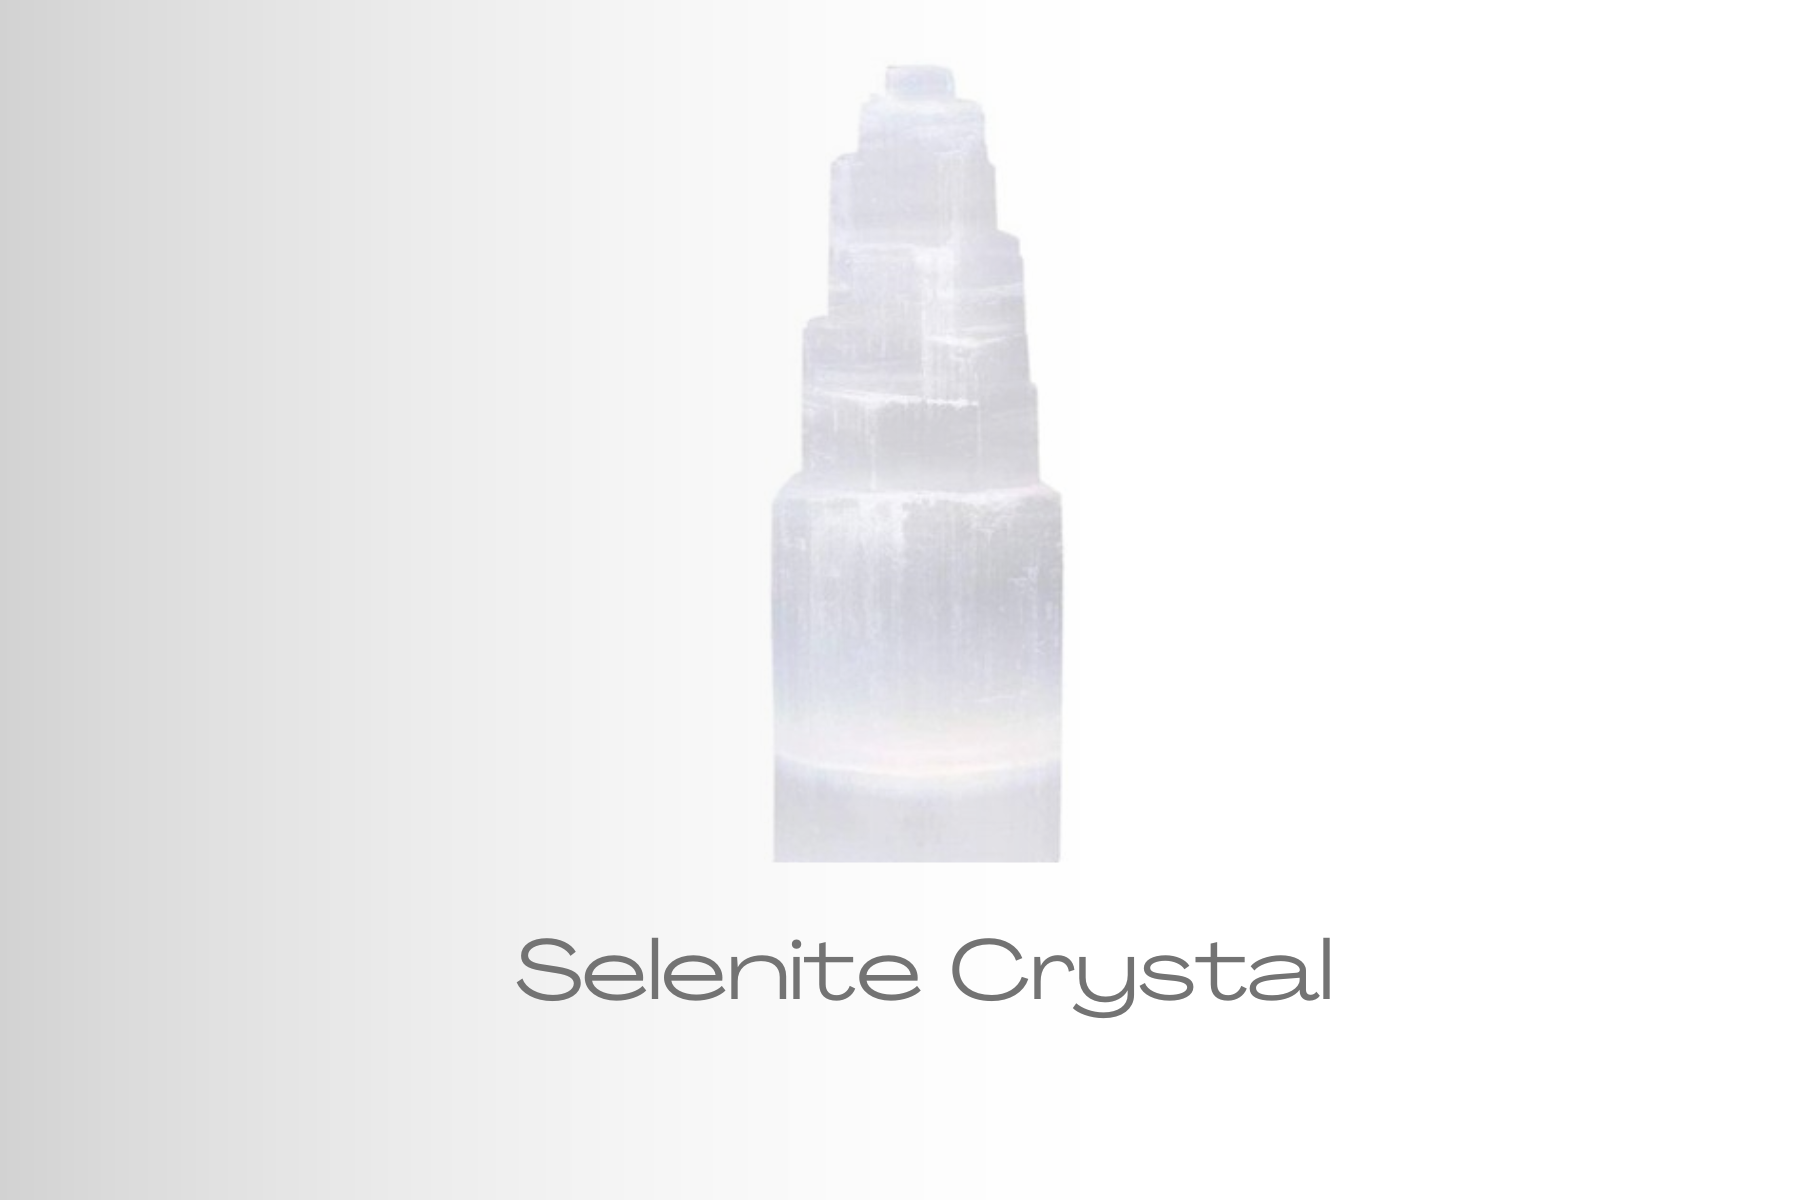 Tower-formed Selenite crystal